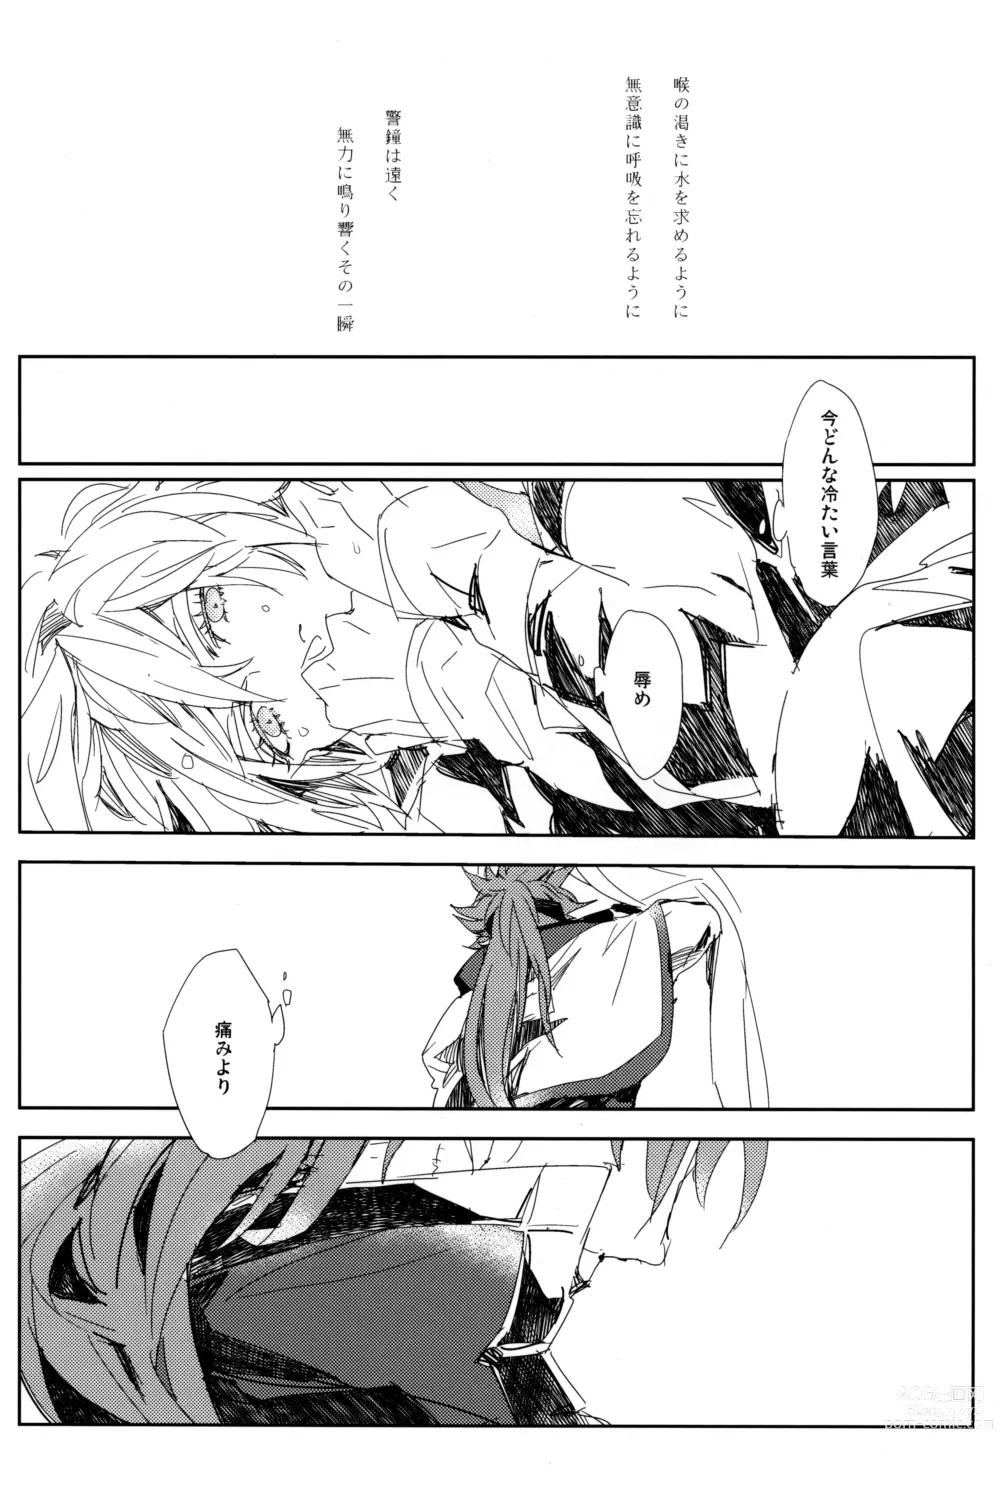 Page 44 of doujinshi Perversion